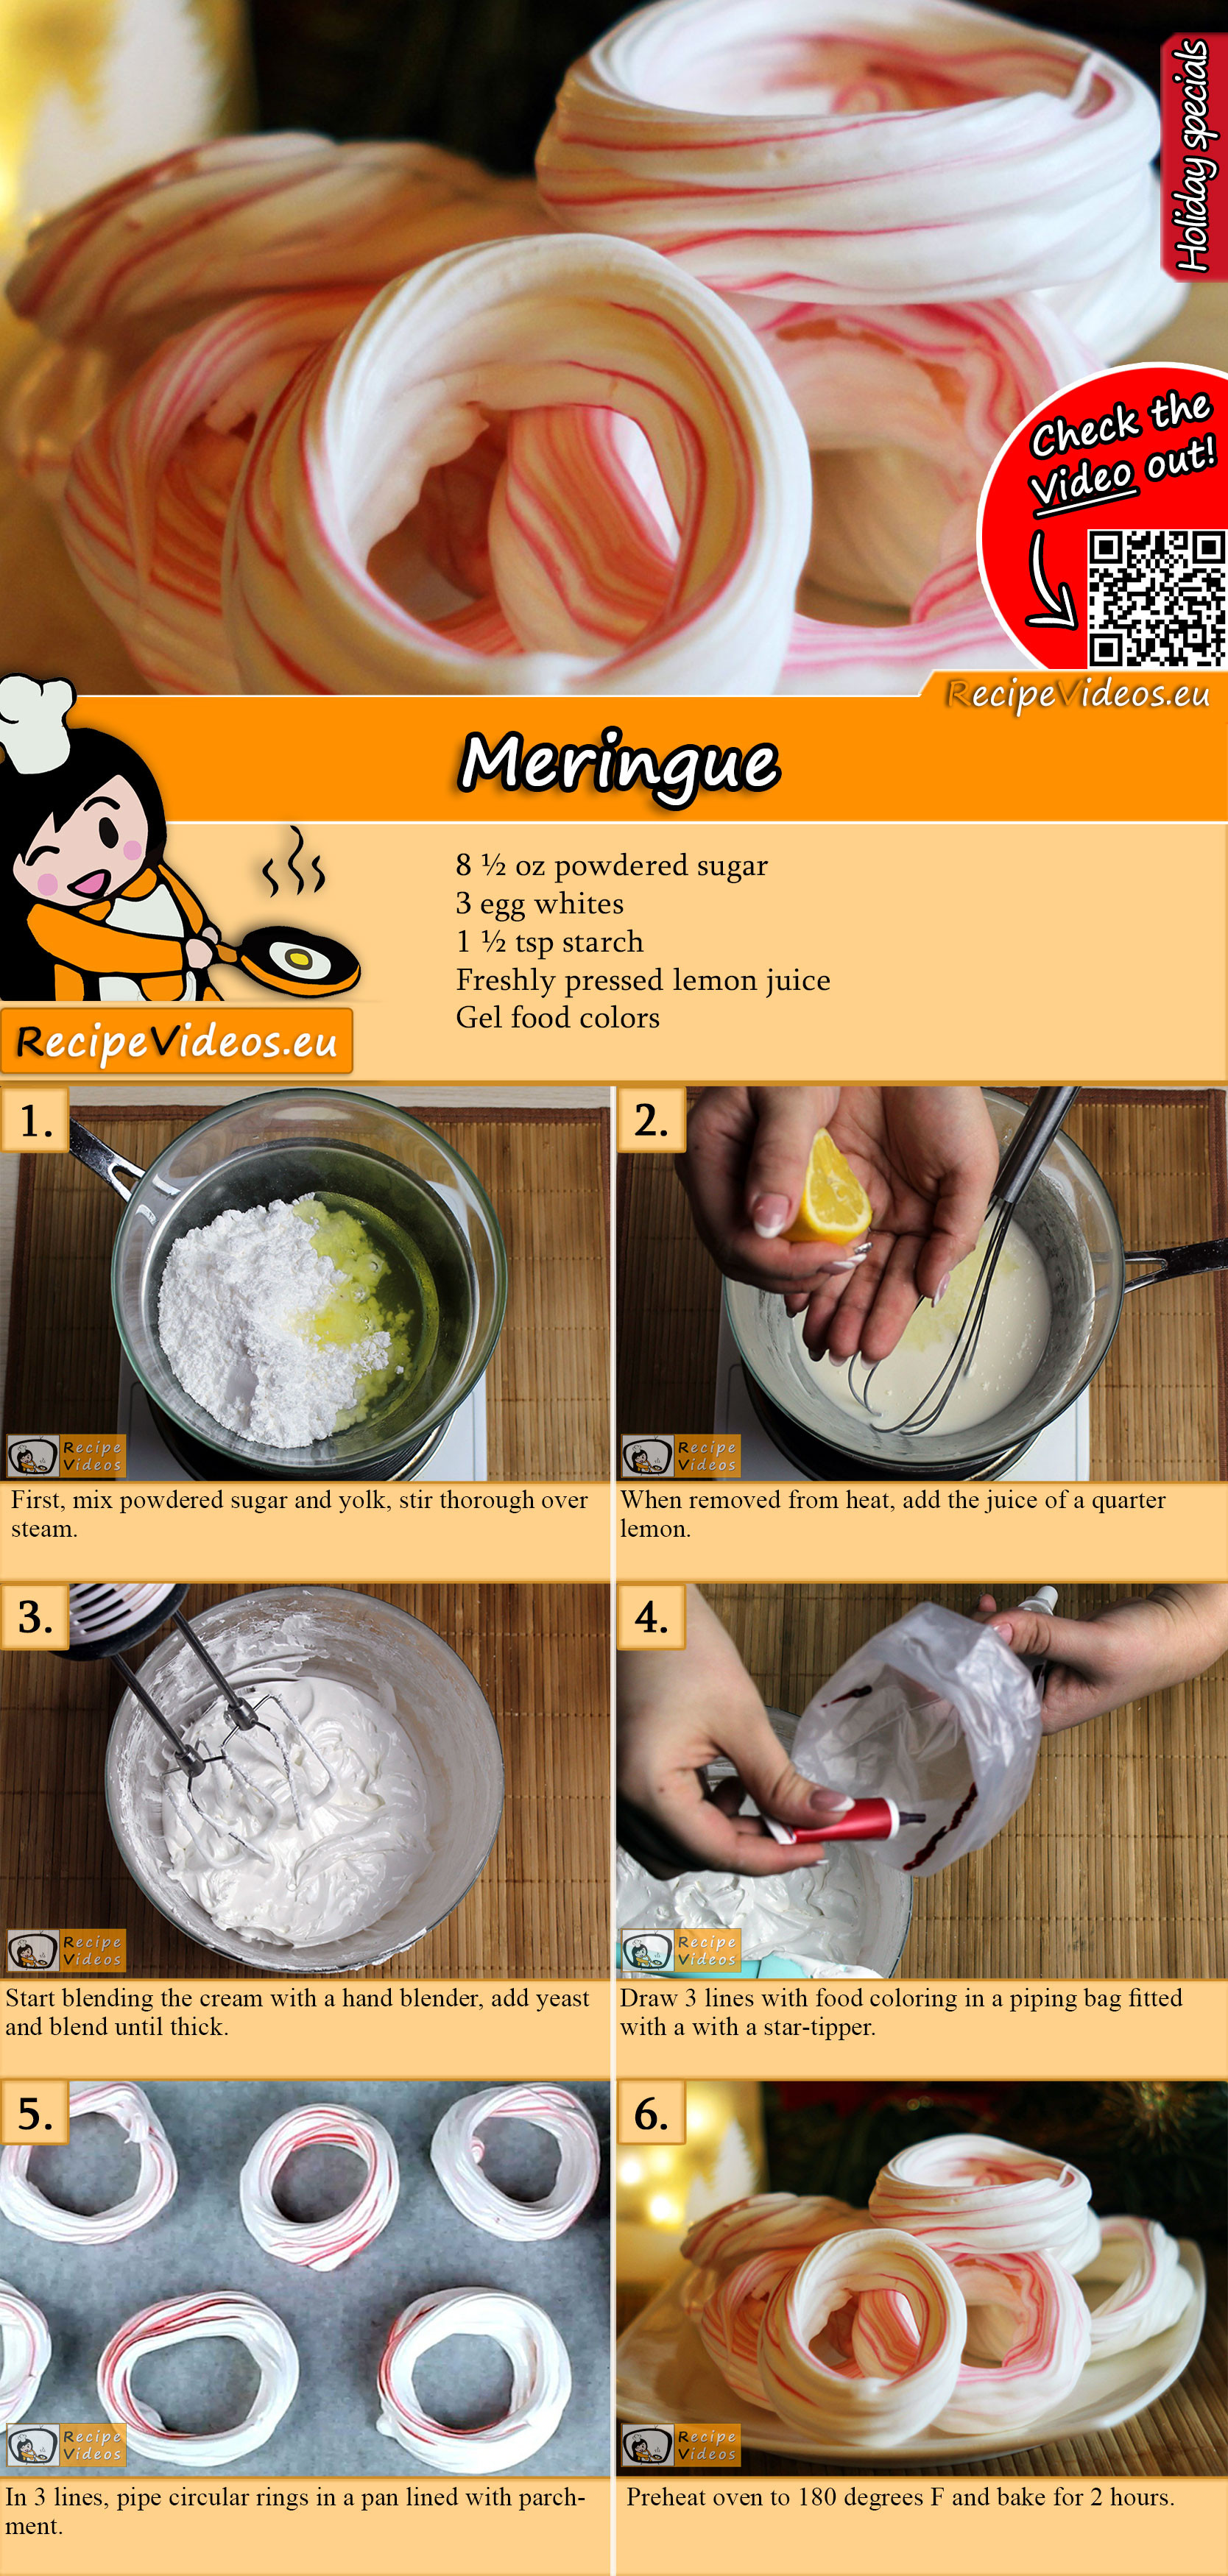 Meringue recipe with video